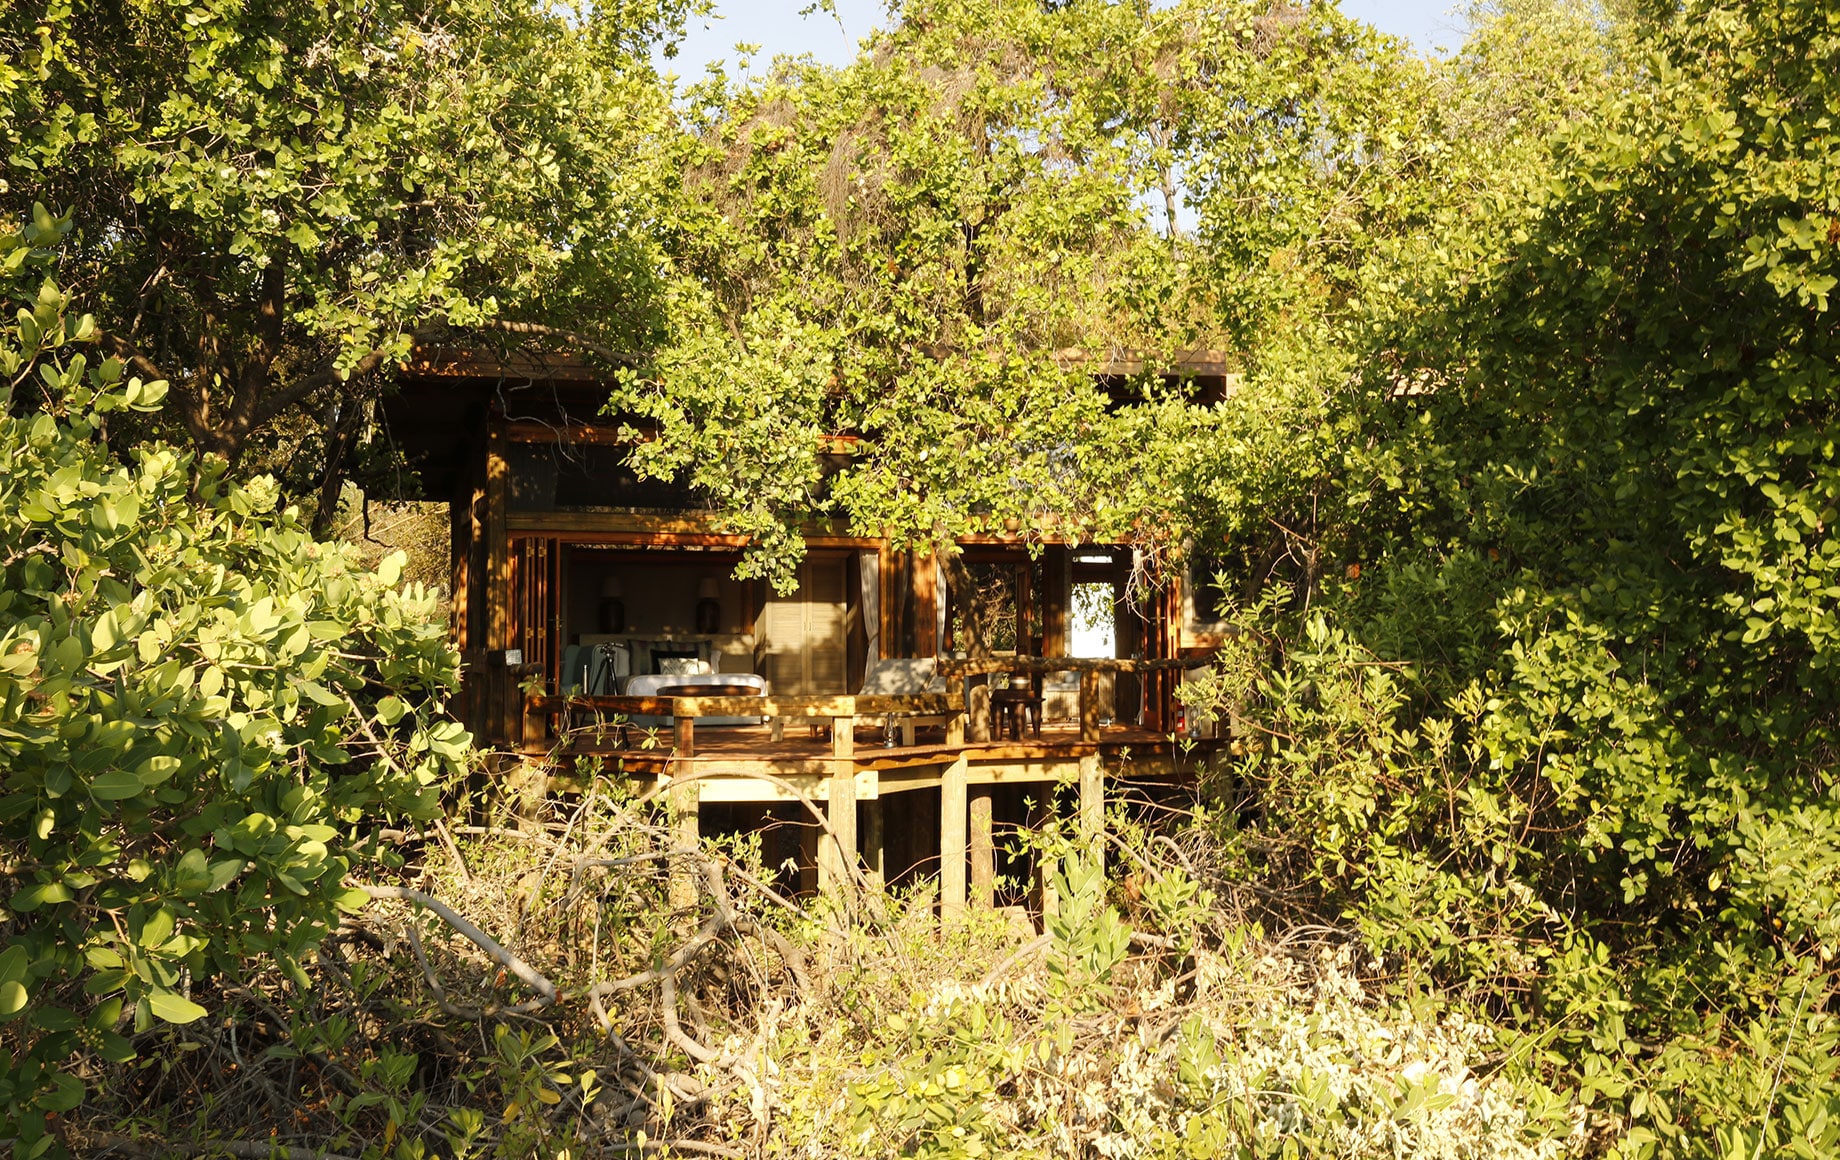 Camp Okavango through the trees